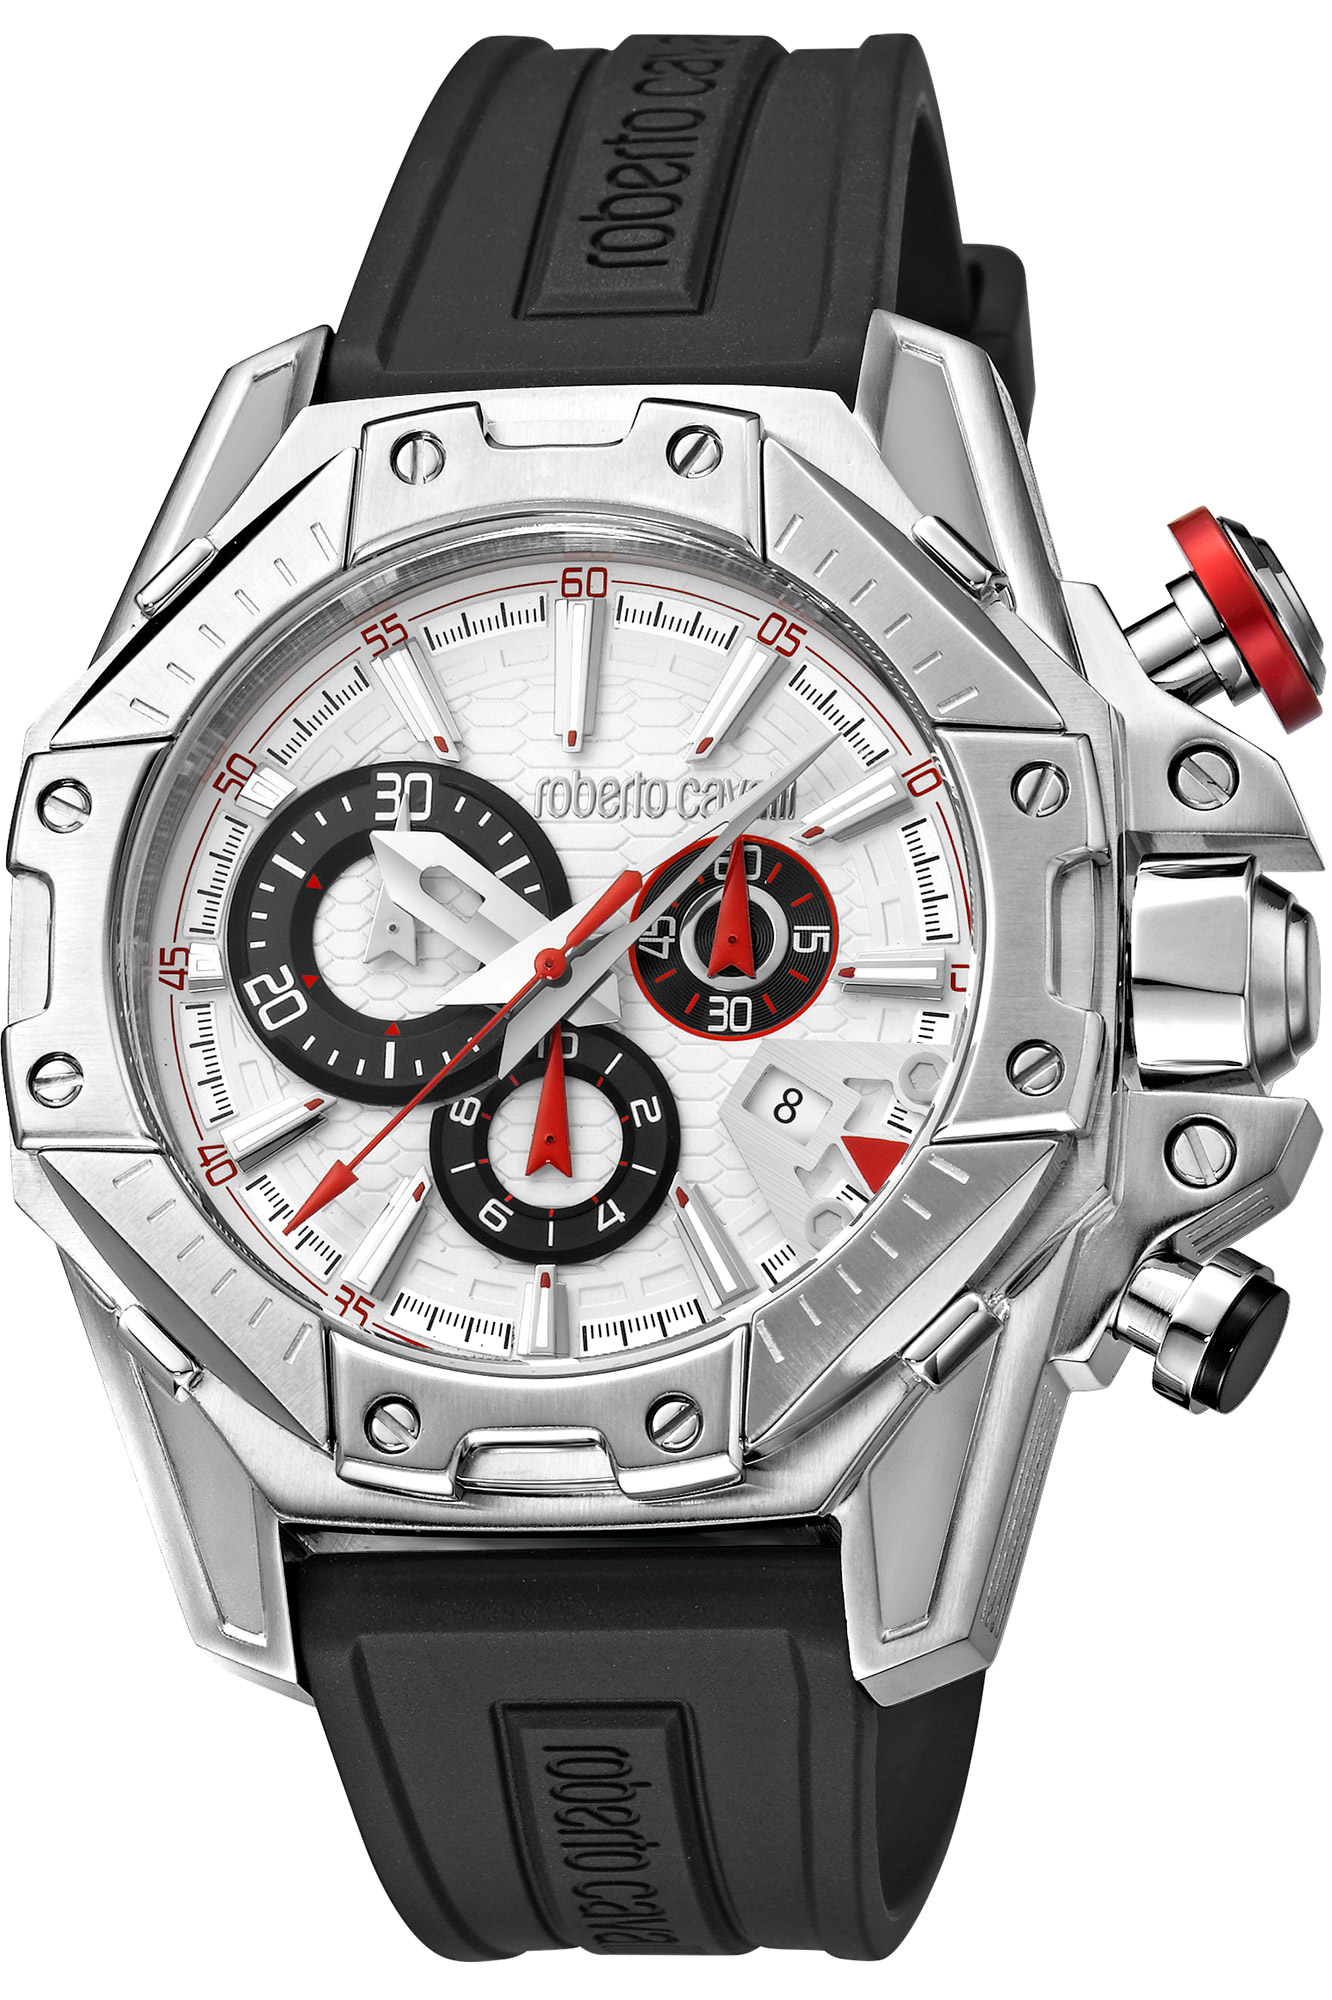 Watch Roberto Cavalli by Franck Muller rv1g057p0011